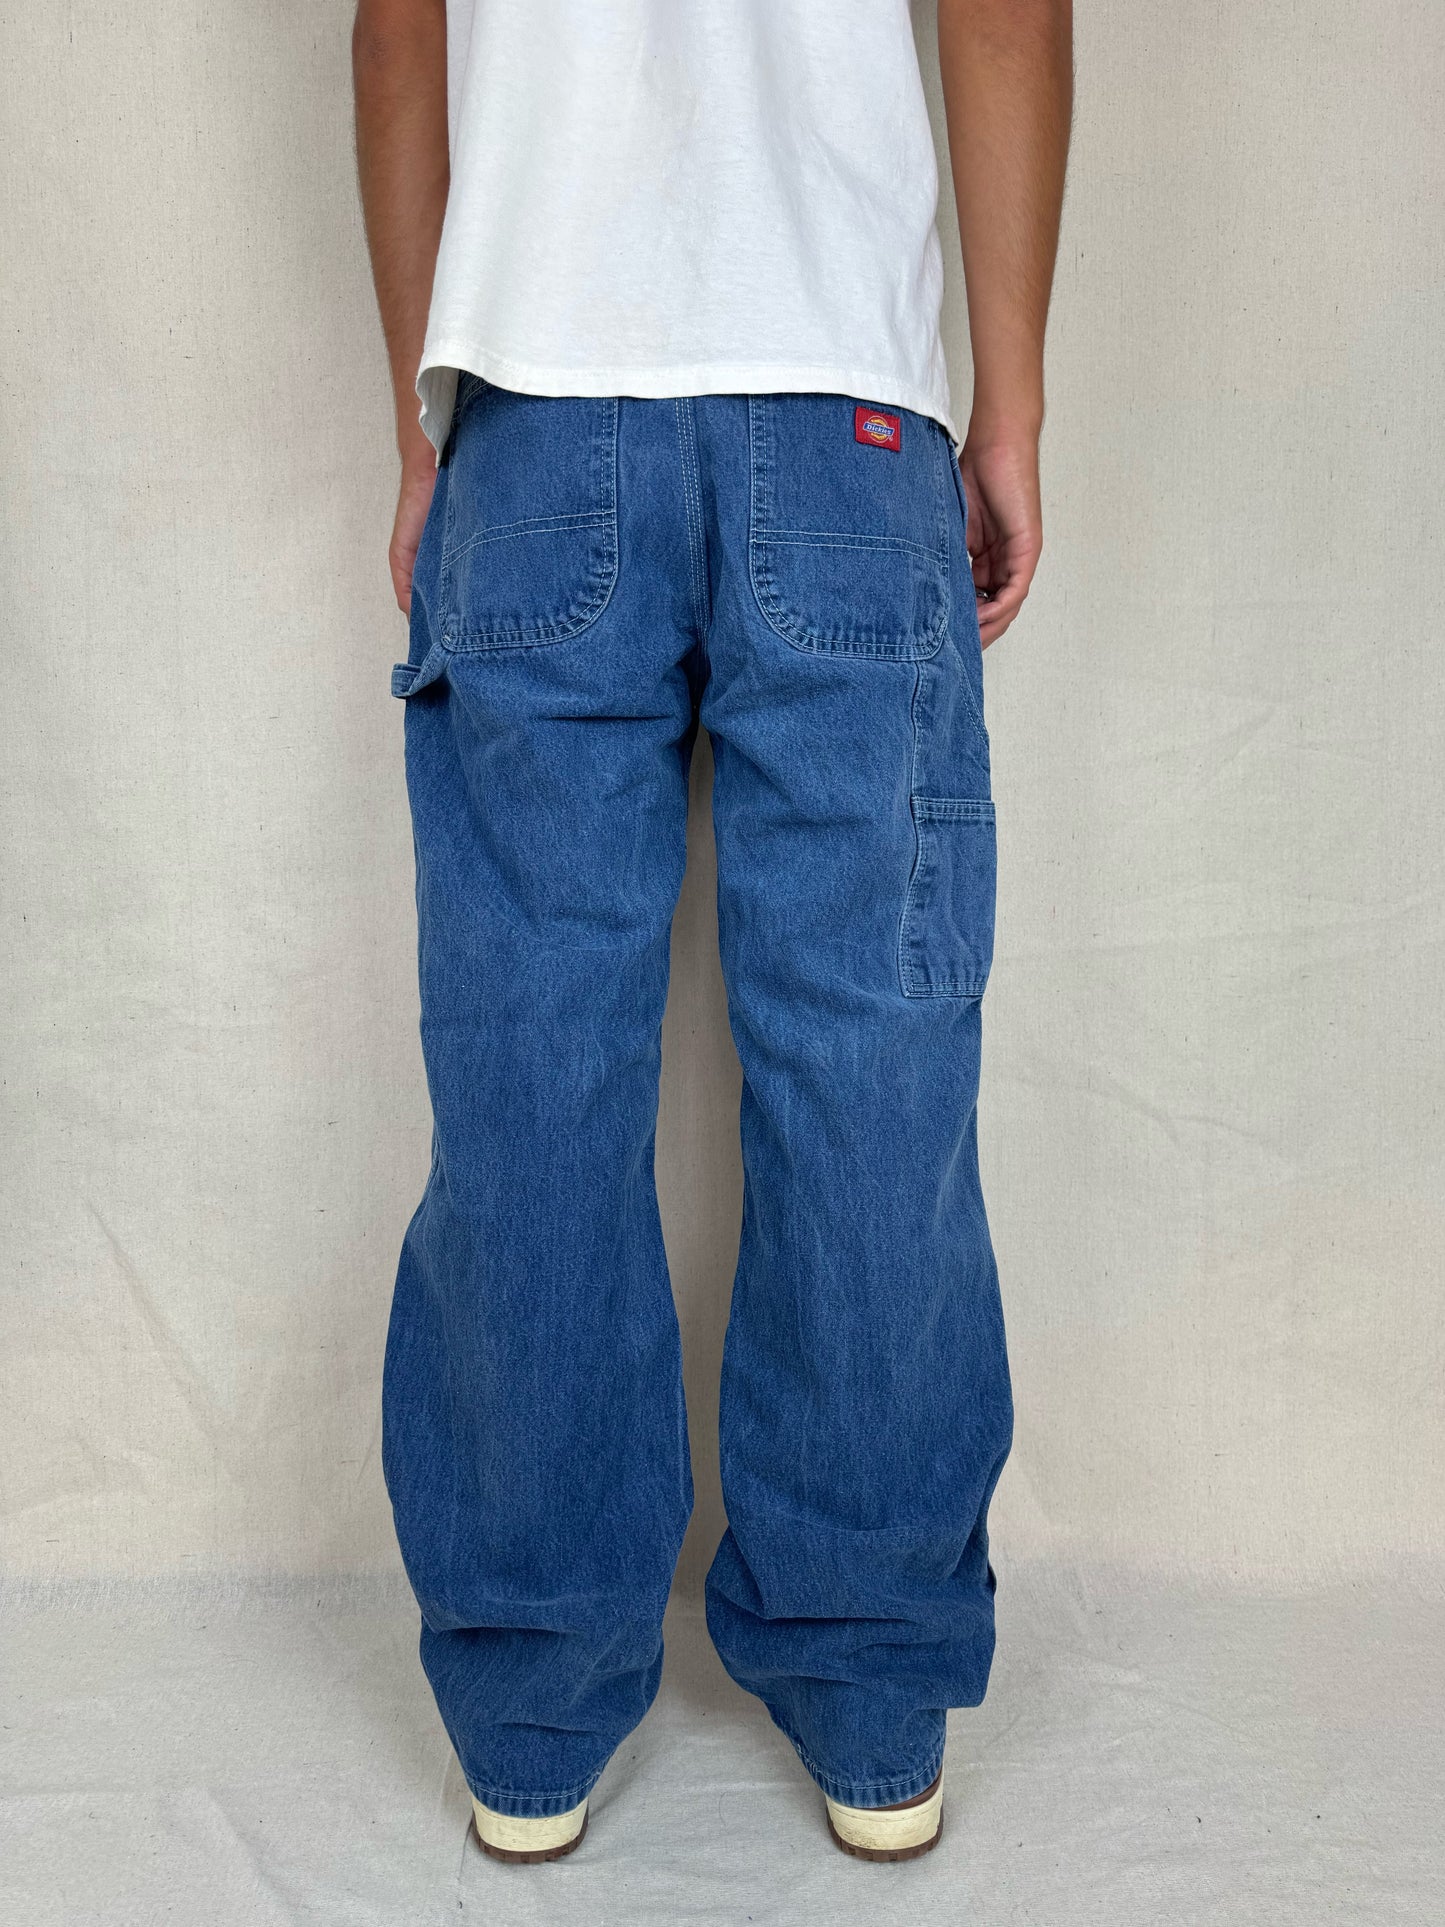 90's Dickies Vintage Carpenter Jeans Size 34x33